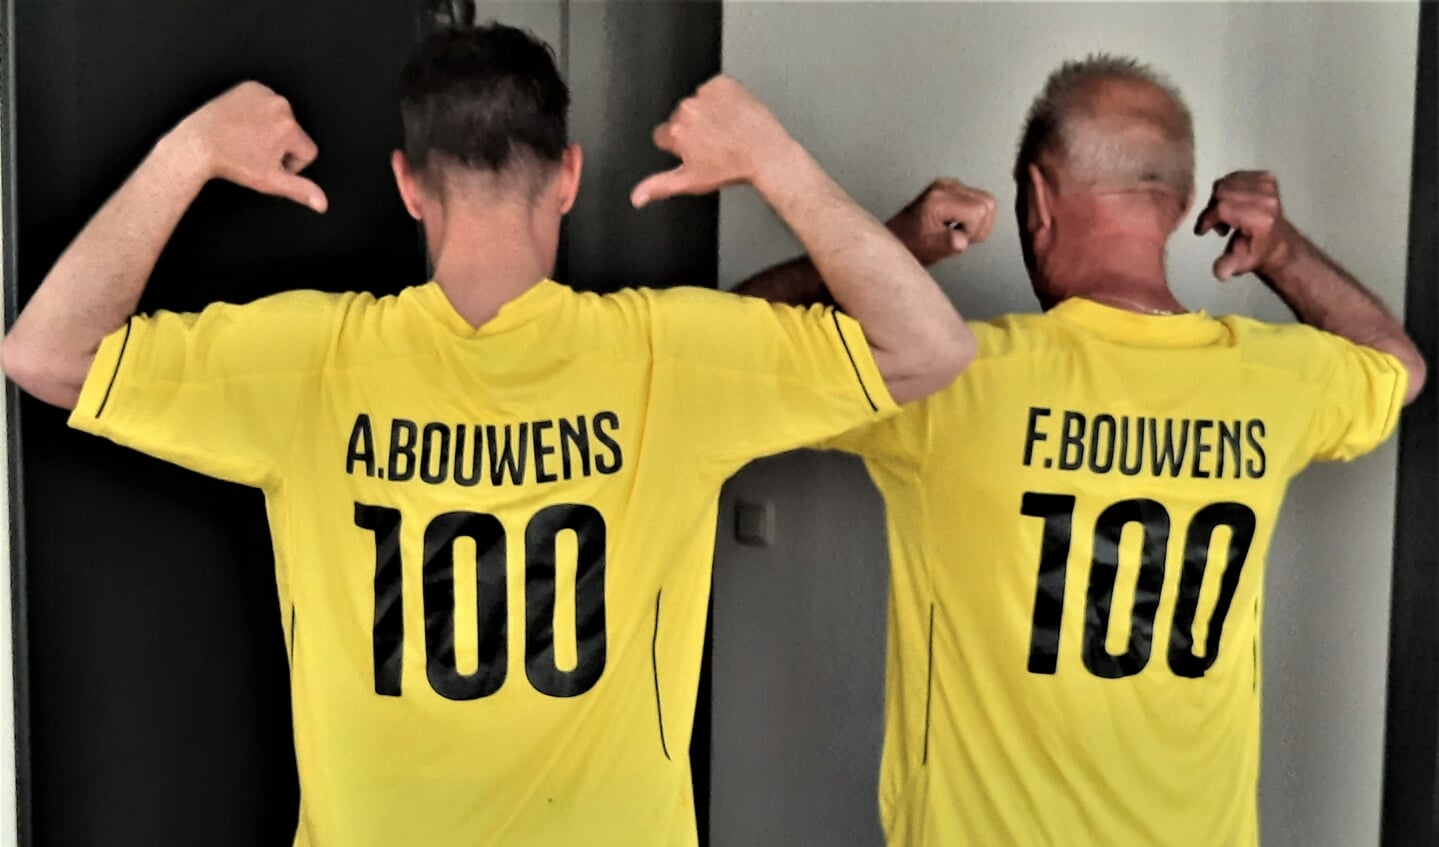 Arjan en Frans Bouwens samen 100 jaar lid van Margriet.